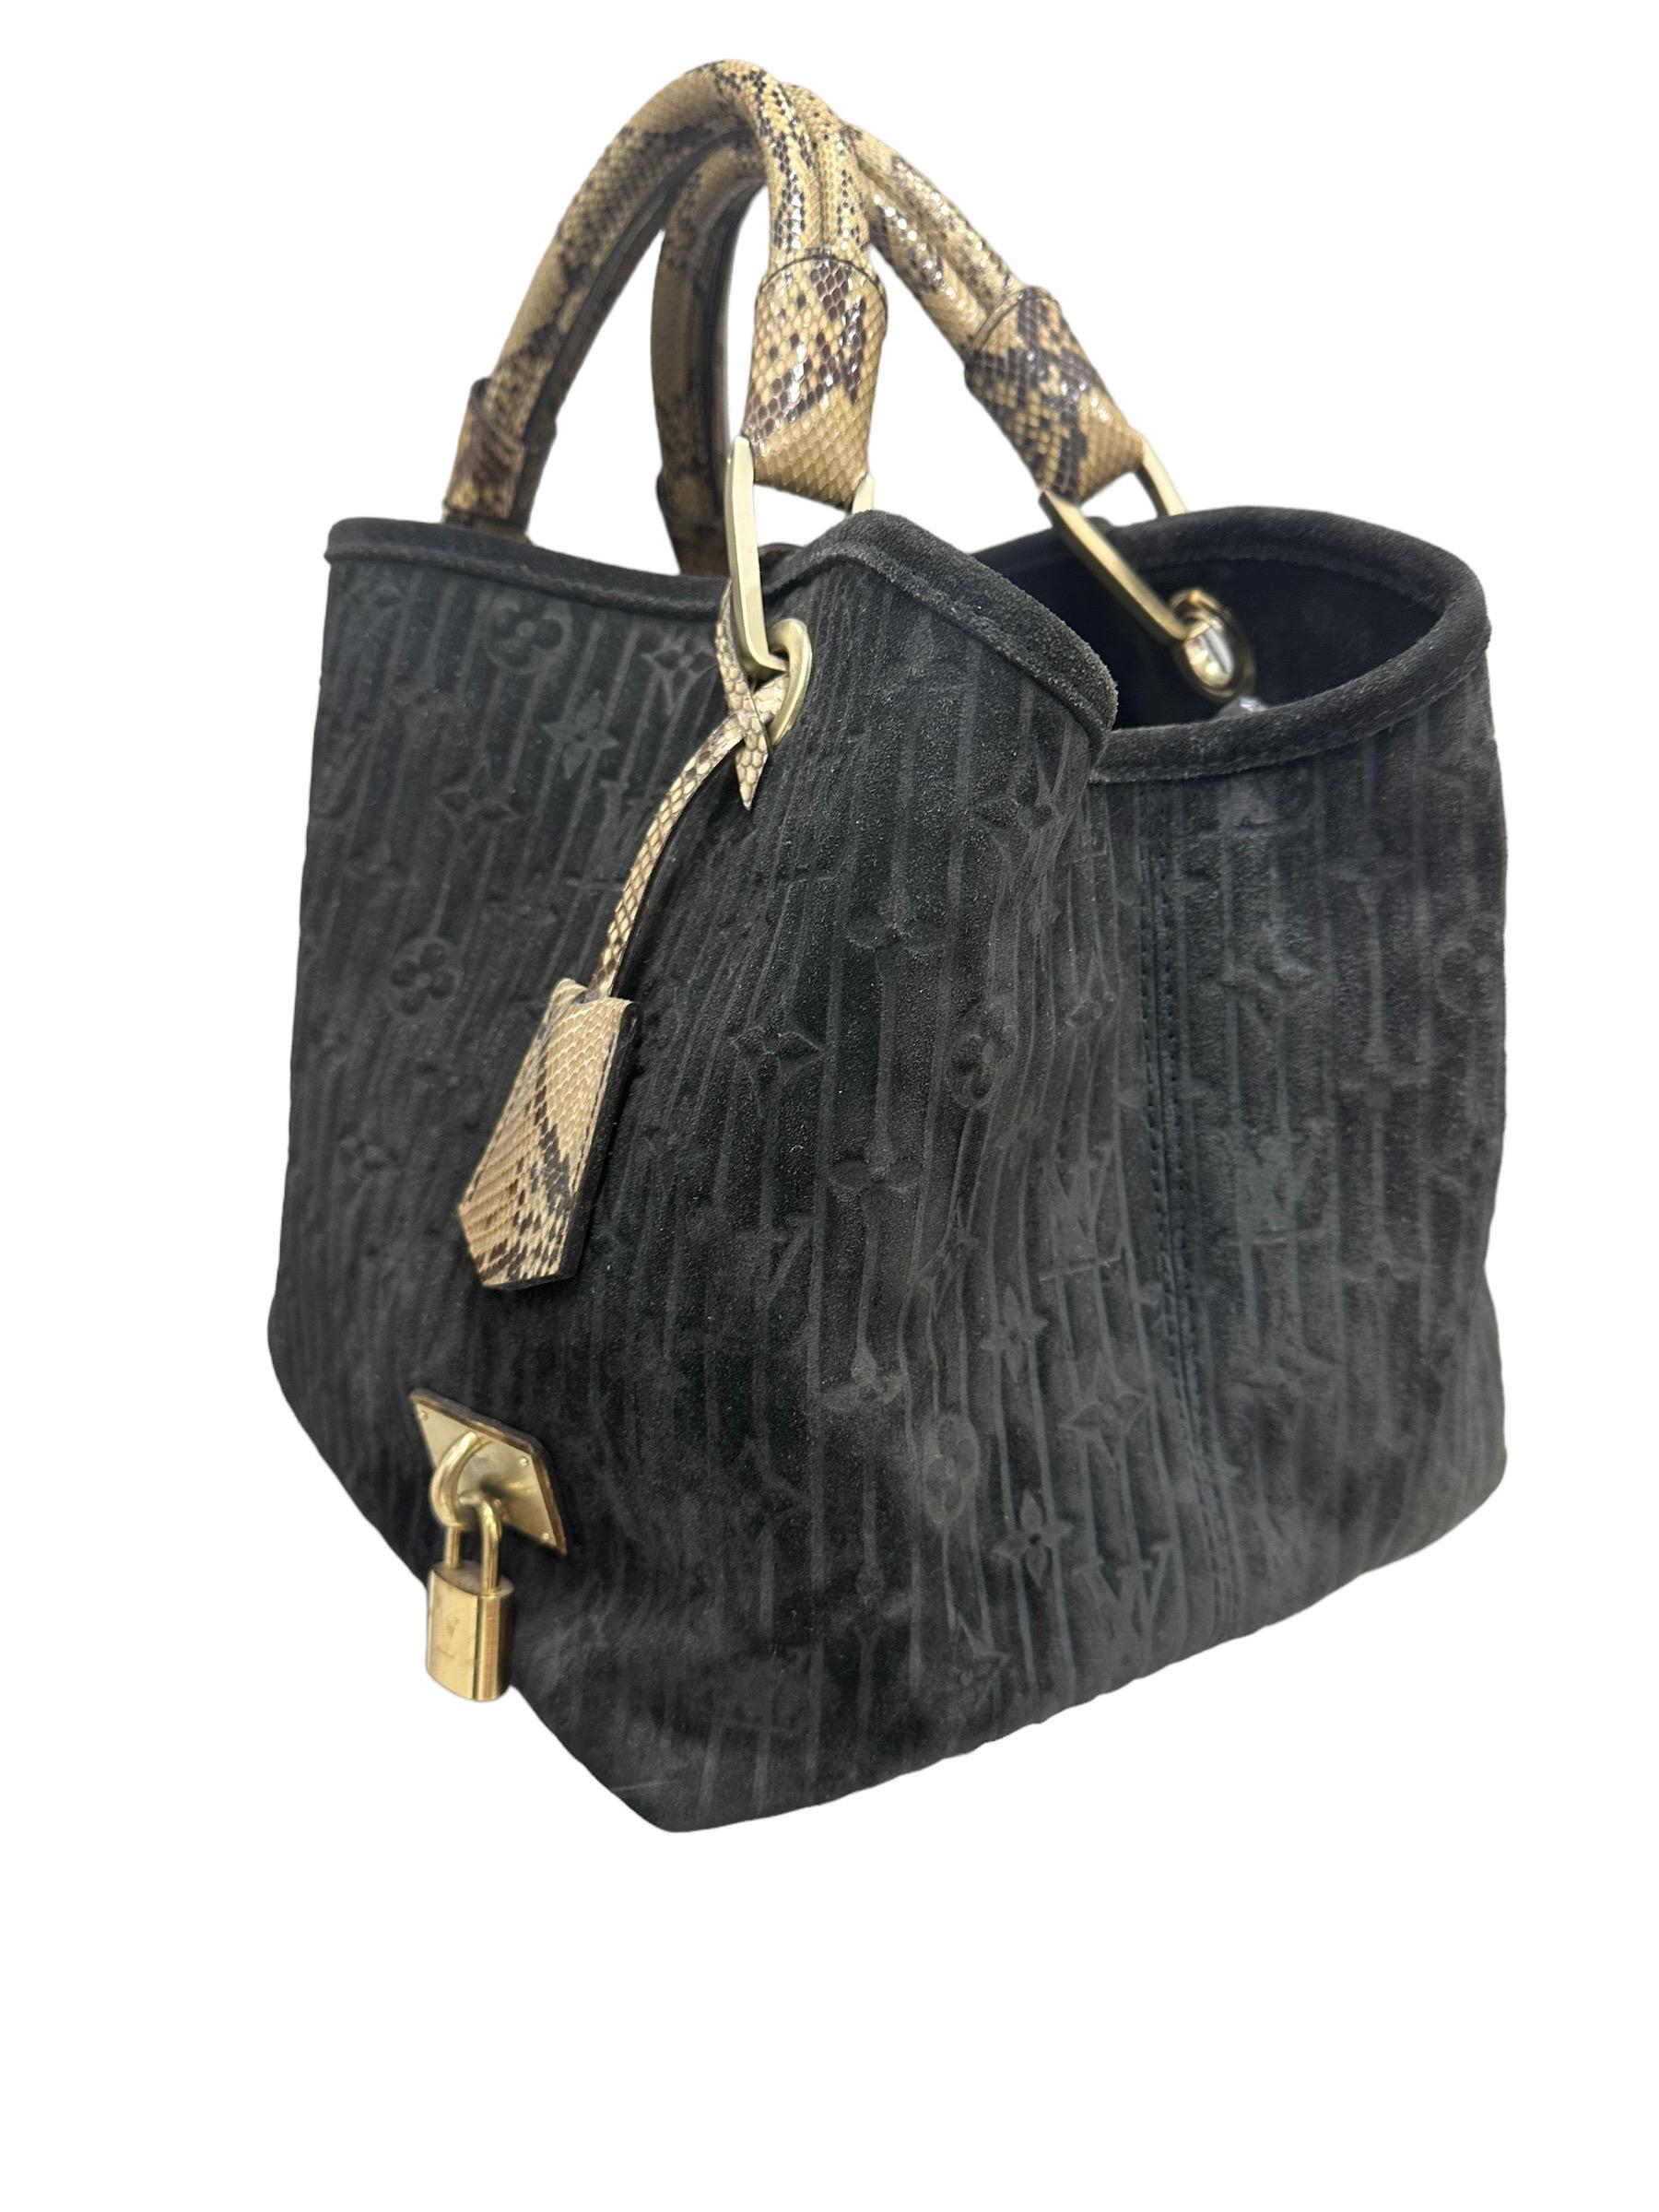 2008 Lousi Vuitton Whisper Black Suede Top Handle Bag Limited Edition For Sale 4